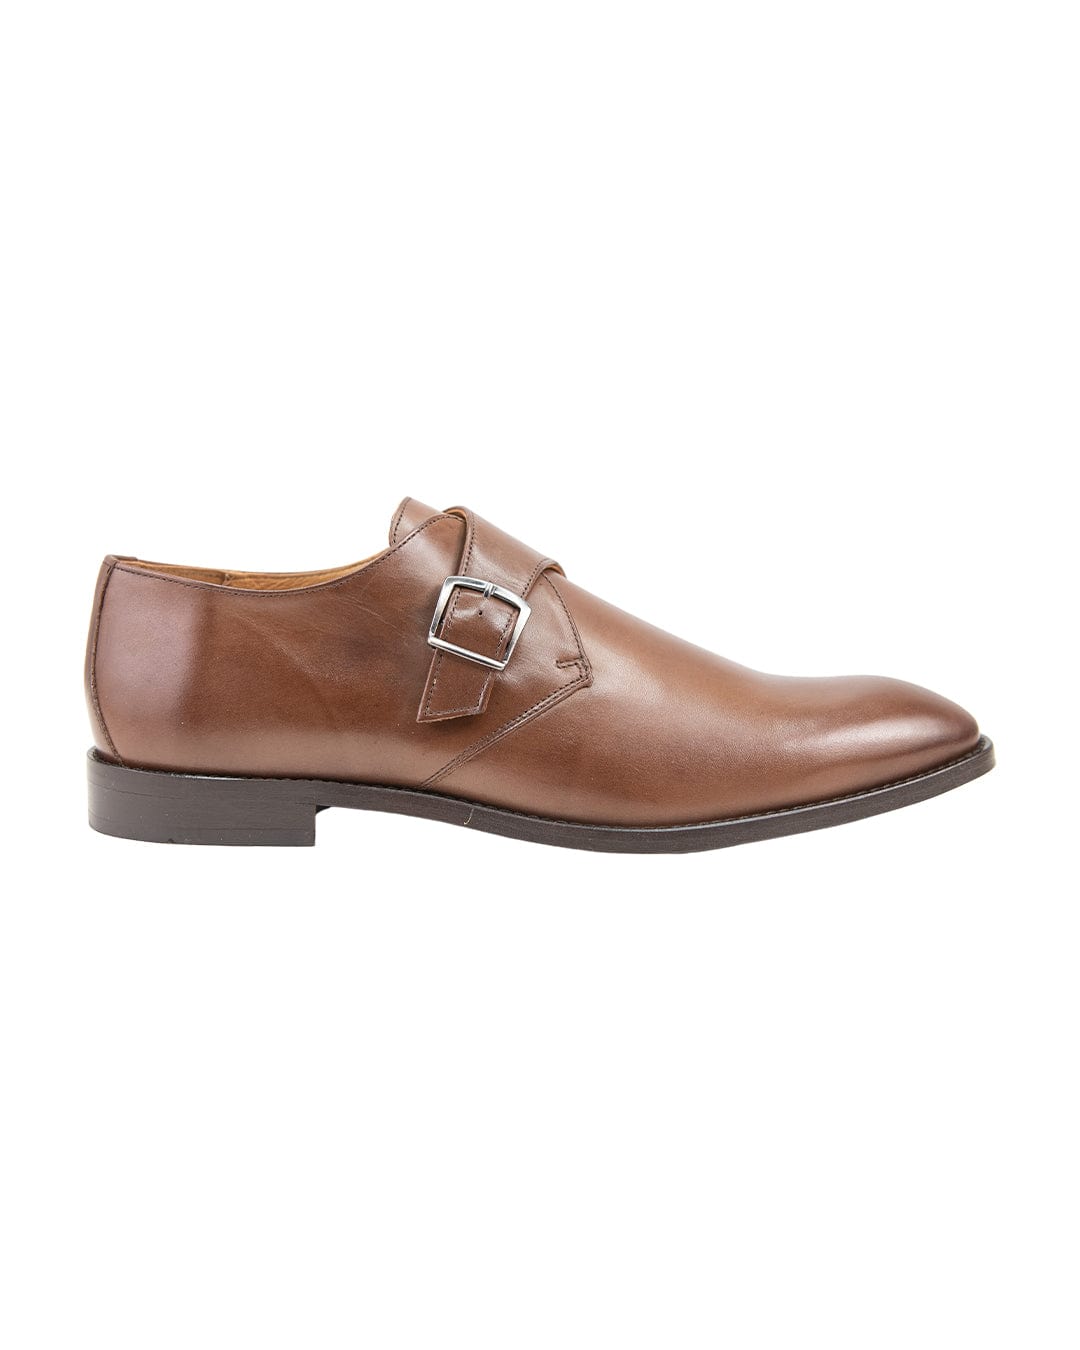 Gagliardi Shoes Gagliardi Brown Leather Single Buckle Monk Strap Shoes